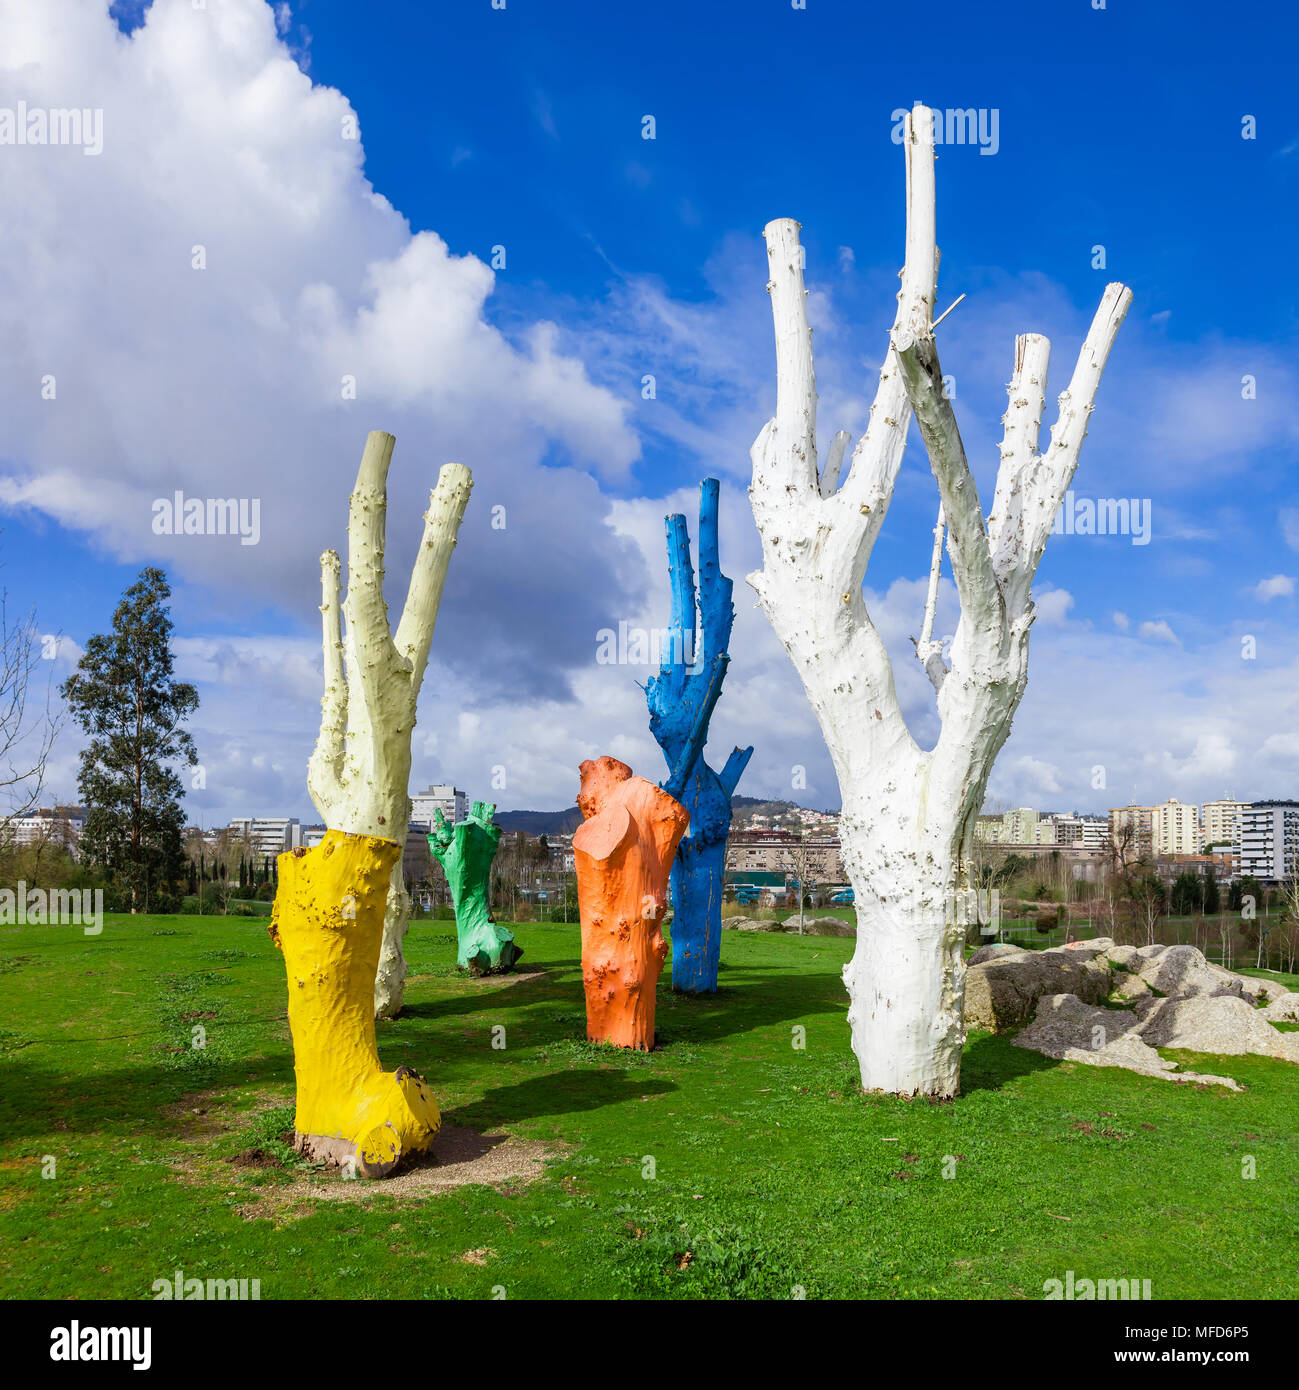 Vila Nova de Famalicao, Portugal - March 31, 2018: Urban art made of colorful painted dead trees in Parque da Devesa Urban Park. Stock Photo